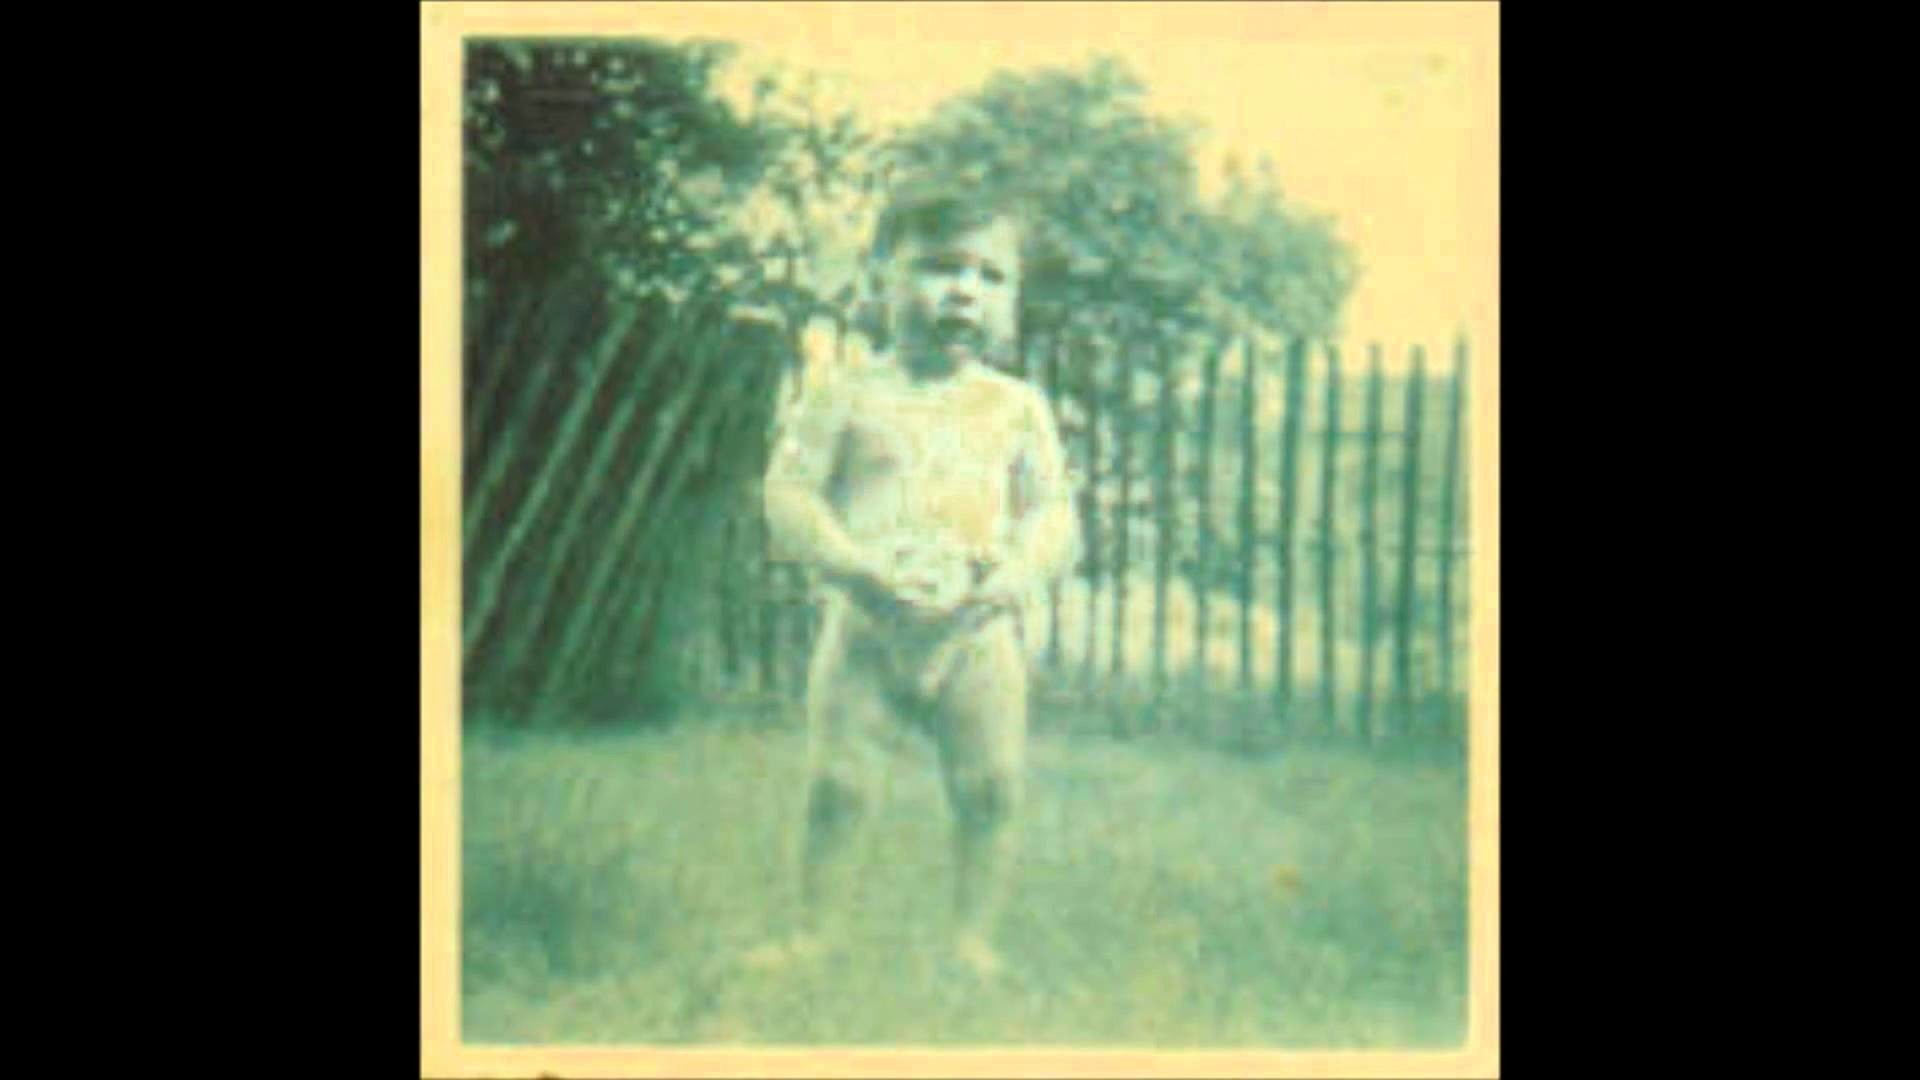 1920x1080 Childhood photos of Sid Vicious